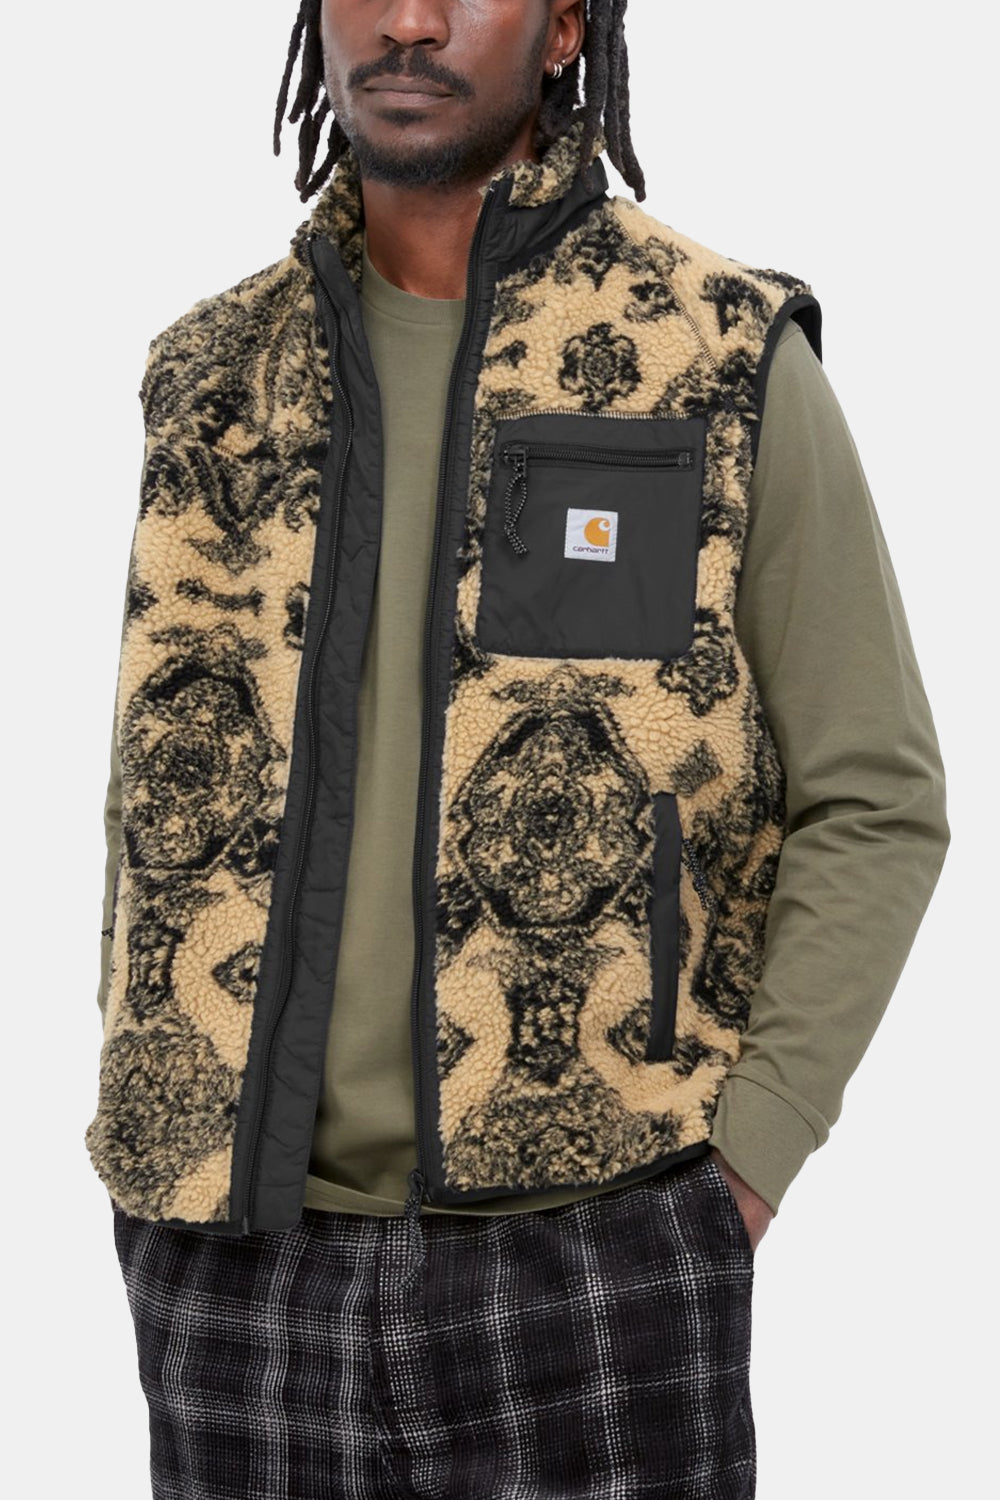 Carhartt WIP Prentis Vest Liner Verse Jacquard Fleece (Dusty Brown &amp; Scoot Black) | Number Six